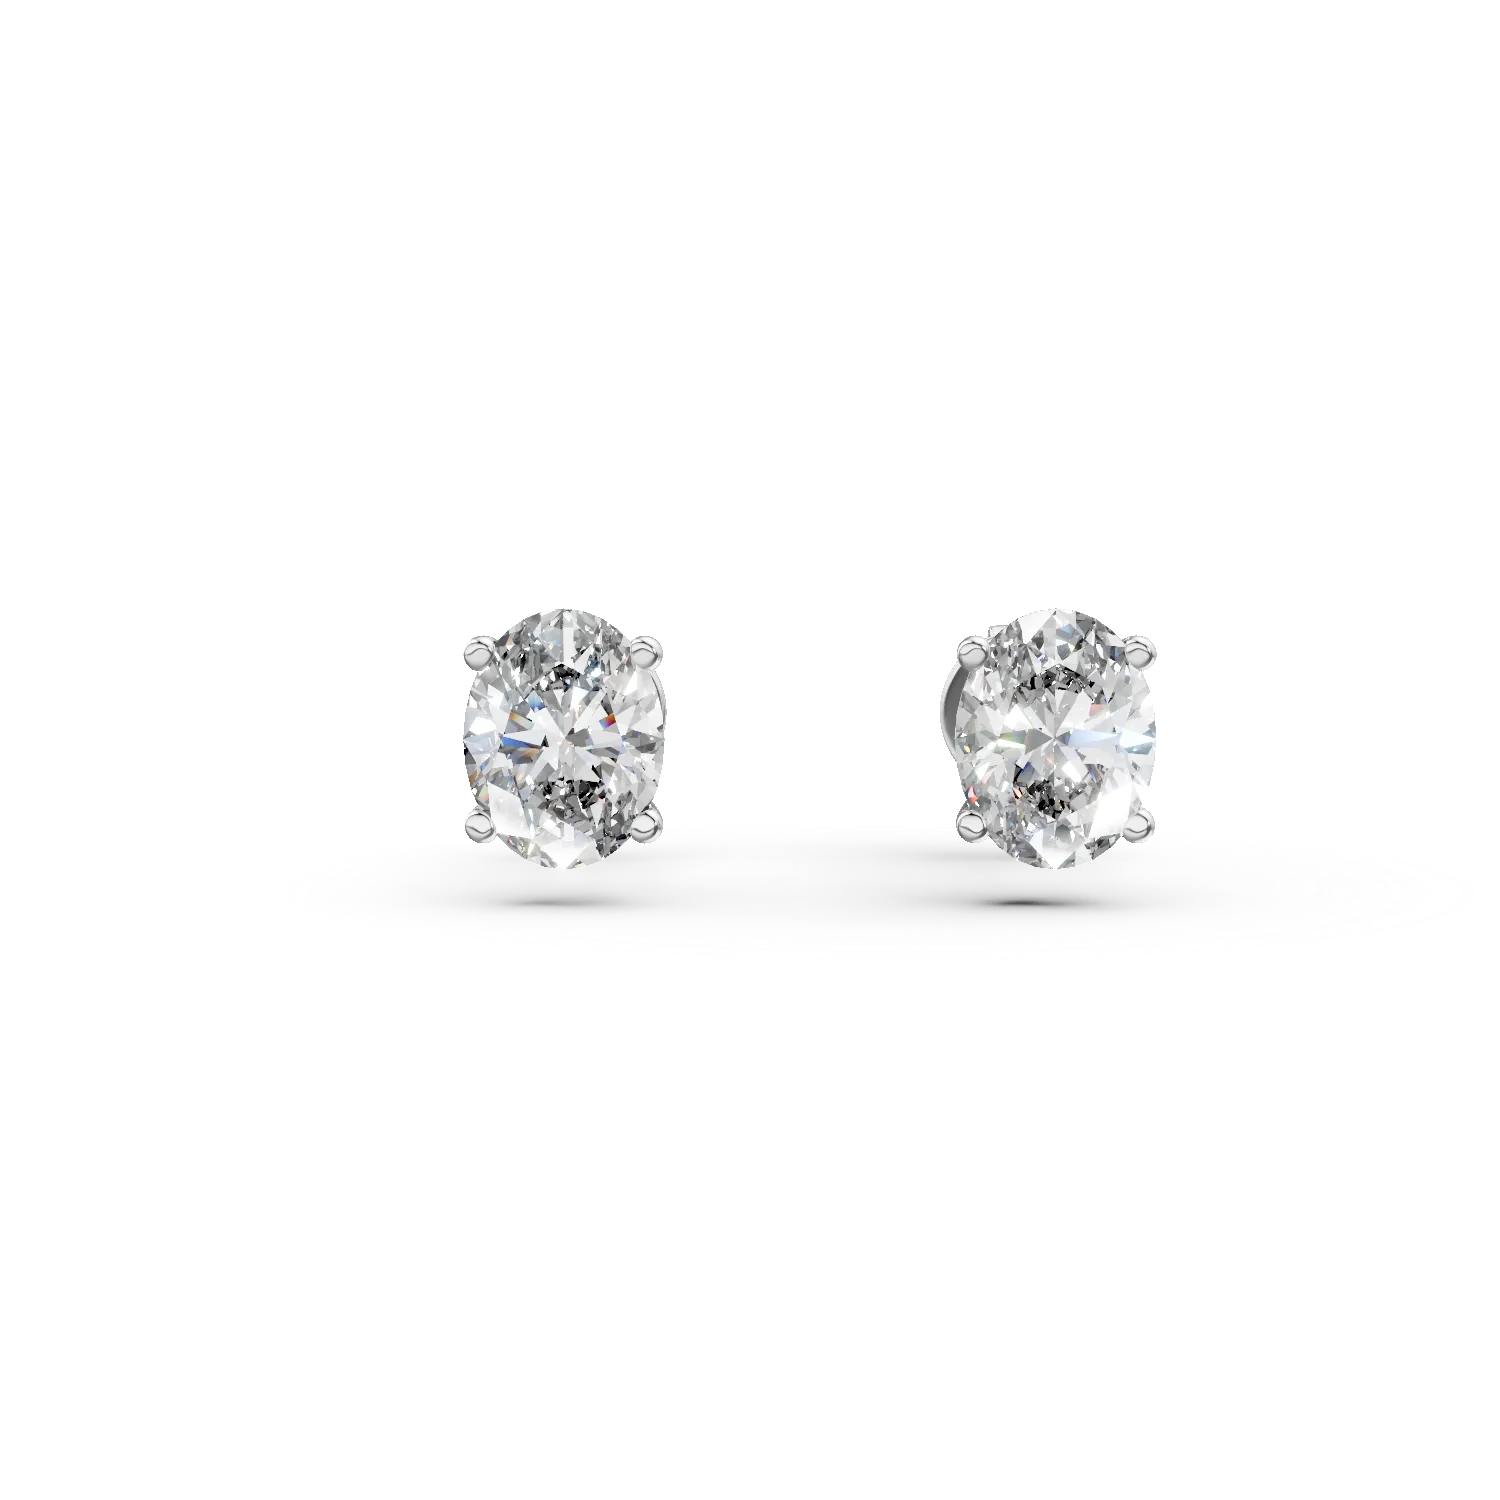 Cercei din aur alb cu diamante solitaire de 0.5ct create in laborator